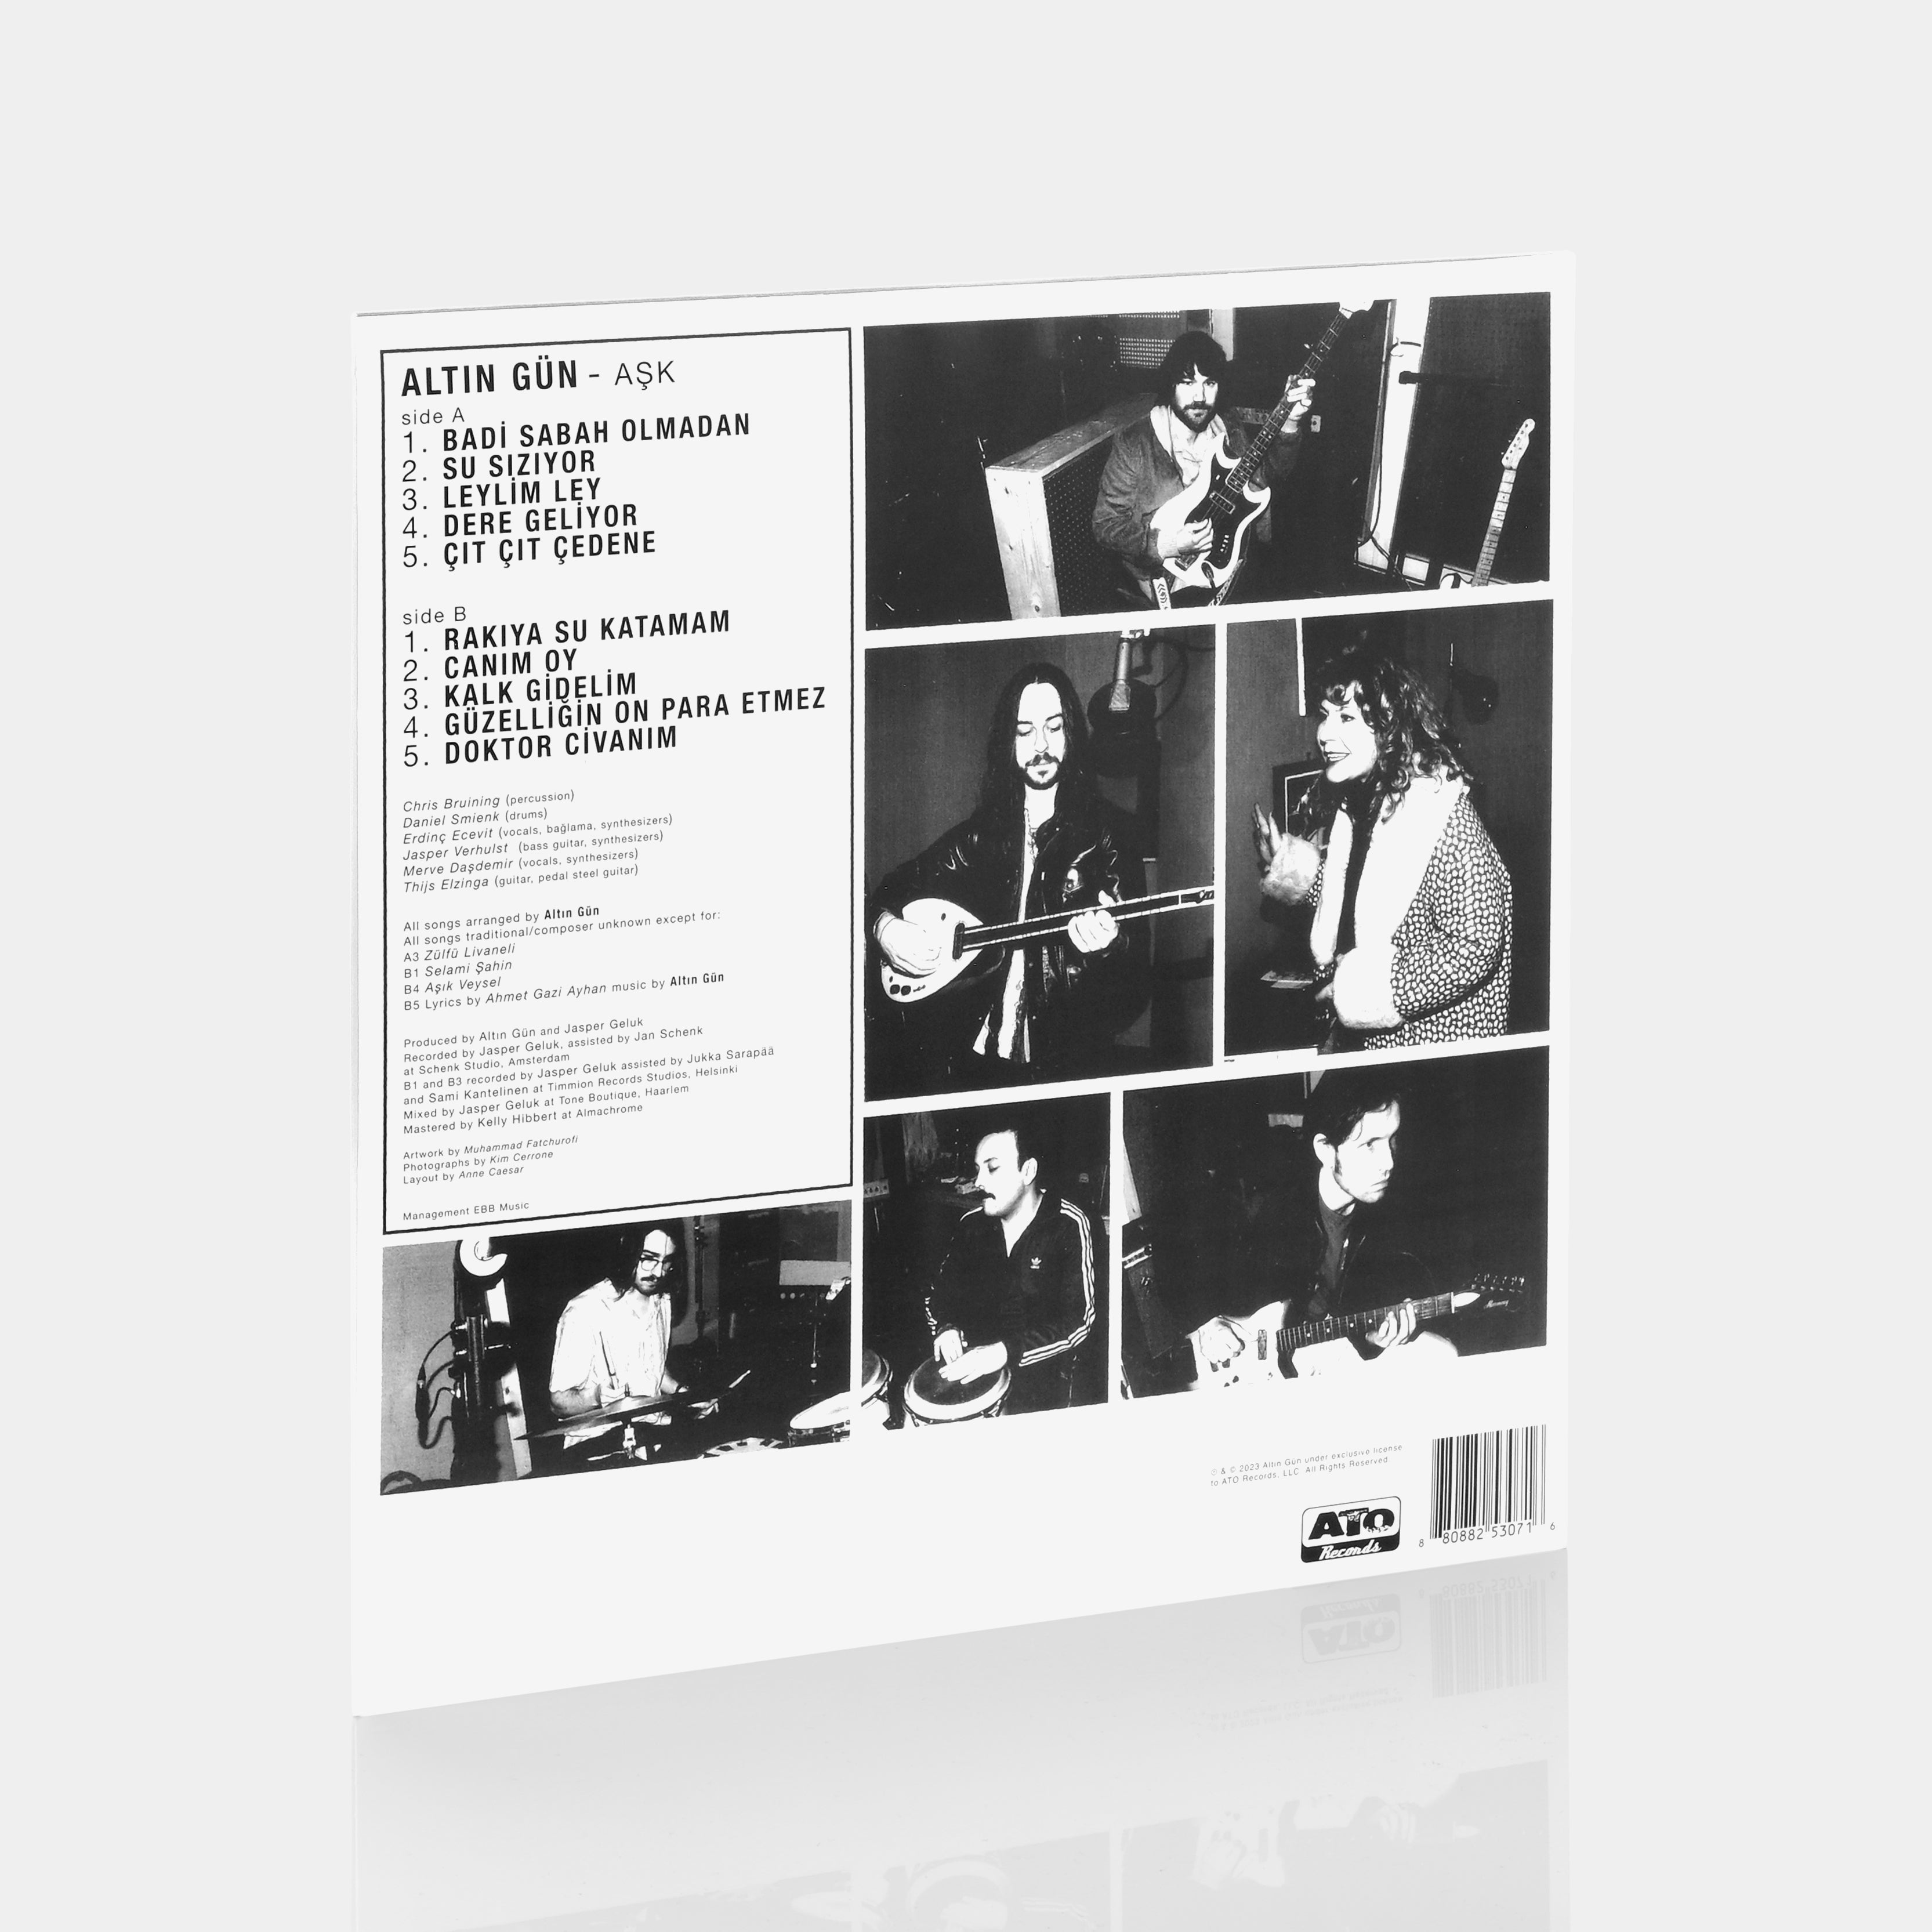 Altin Gün - Aşk LP Ghostly Orange Vinyl Record